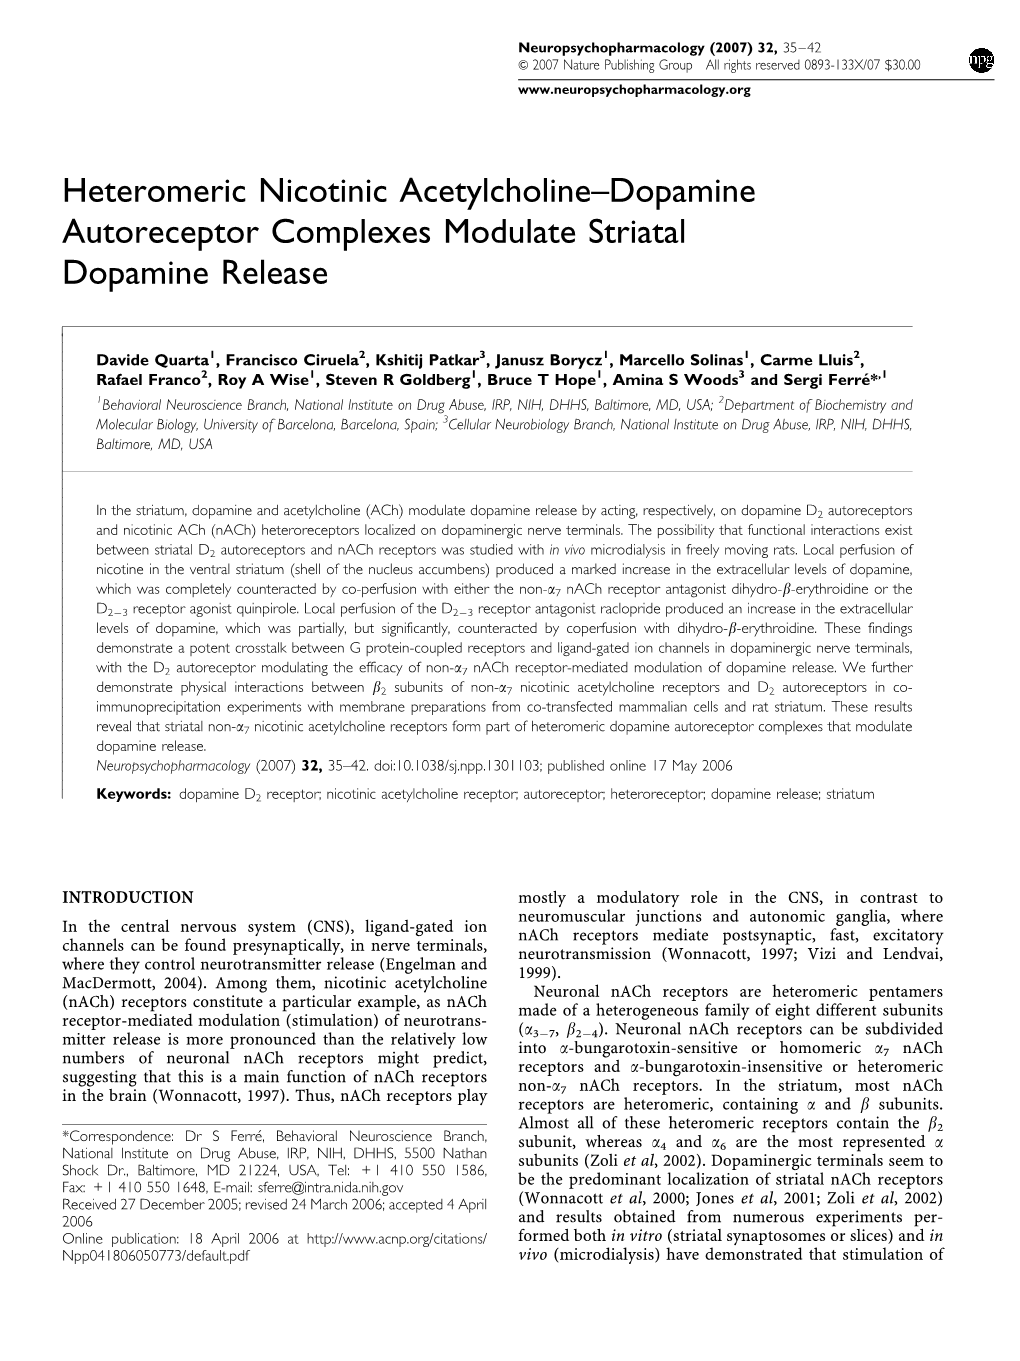 Heteromeric Nicotinic Acetylcholine–Dopamine Autoreceptor Complexes Modulate Striatal Dopamine Release